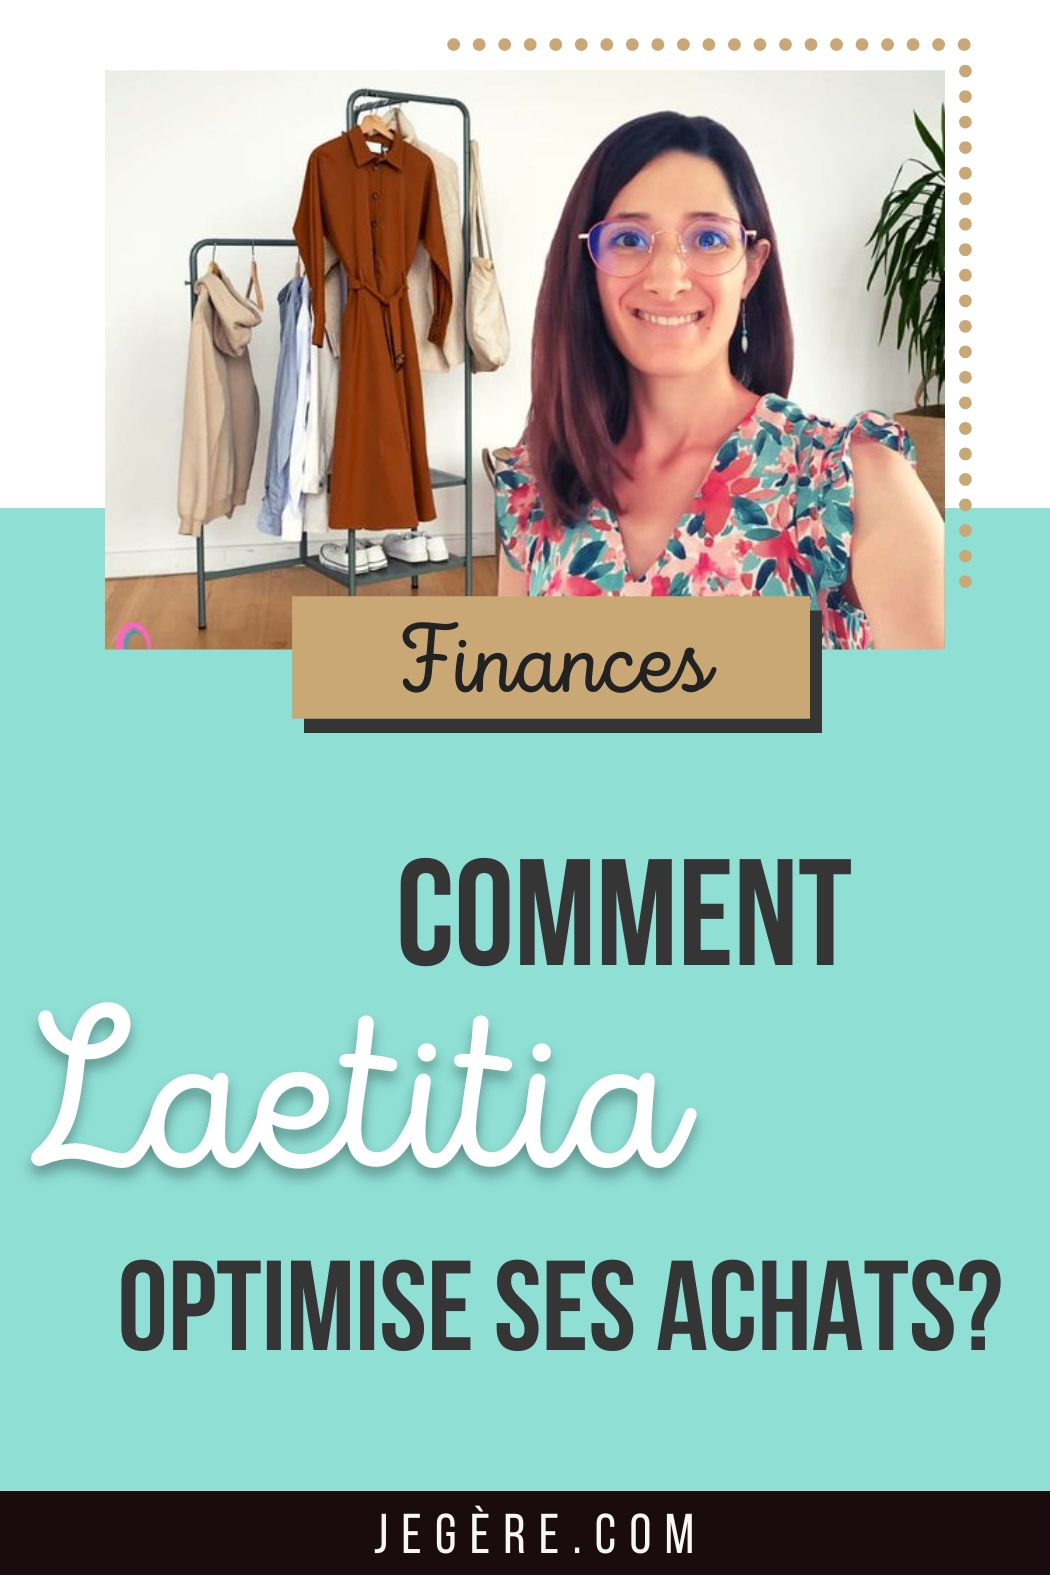 Comment Laetitia optimise ses achats?